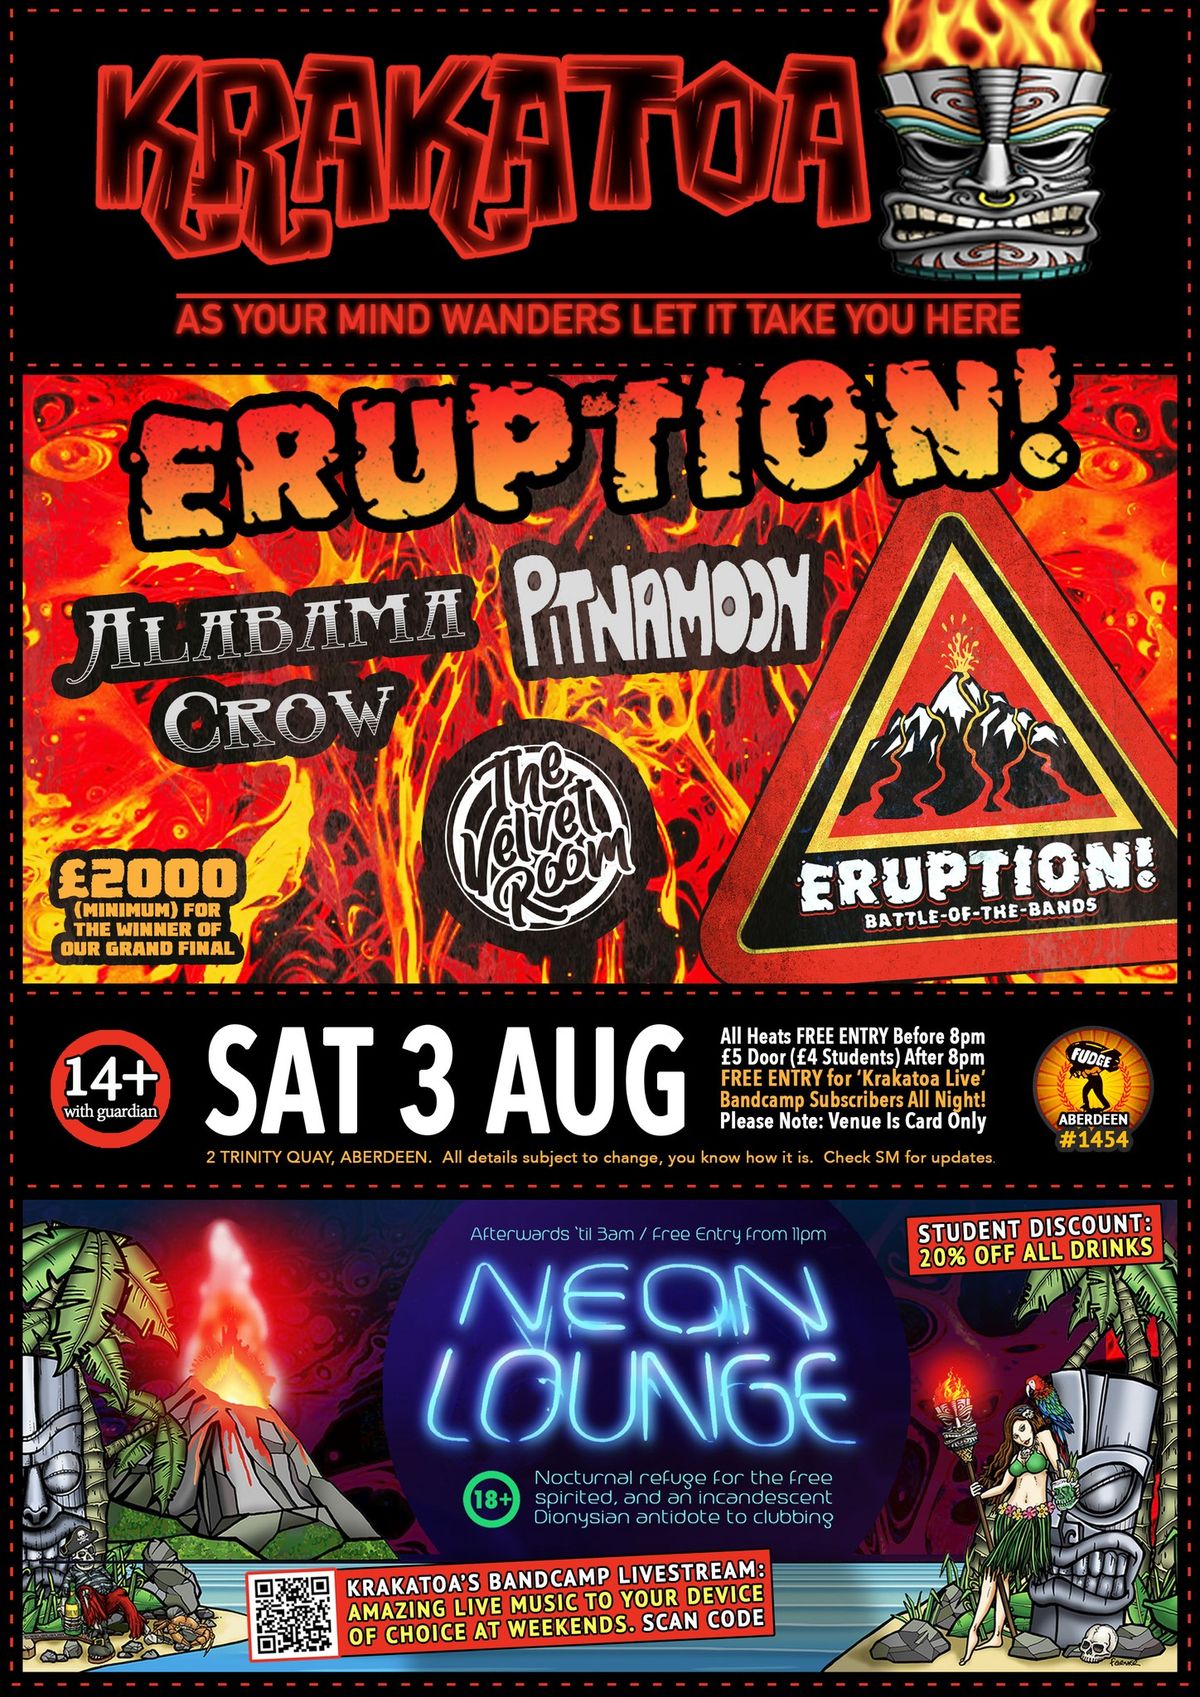 Eruption! \u00a32K BOTB - HEAT - Alabama Crow + Pitnamoon + The Velvet Room